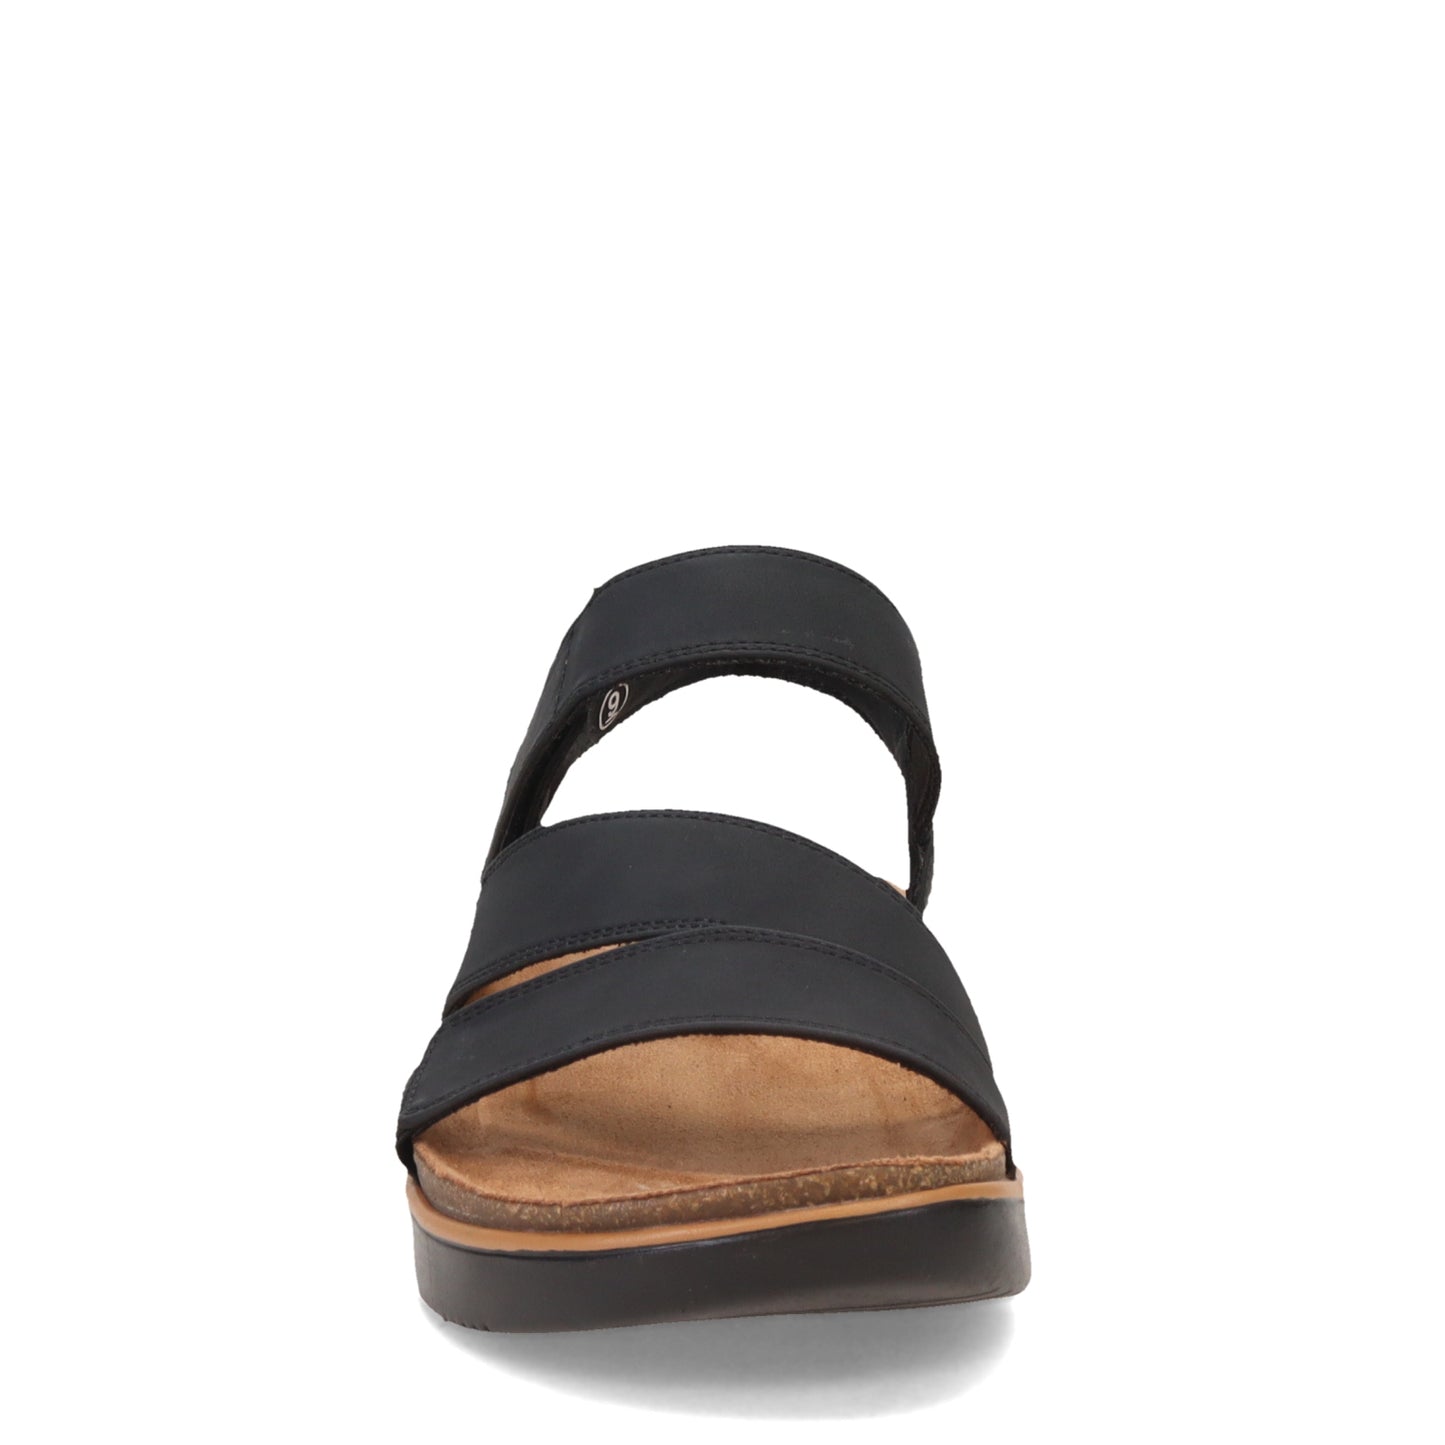 Peltz Shoes  Women's Skechers Lifted Comfort Sandal Black 163252-BLK